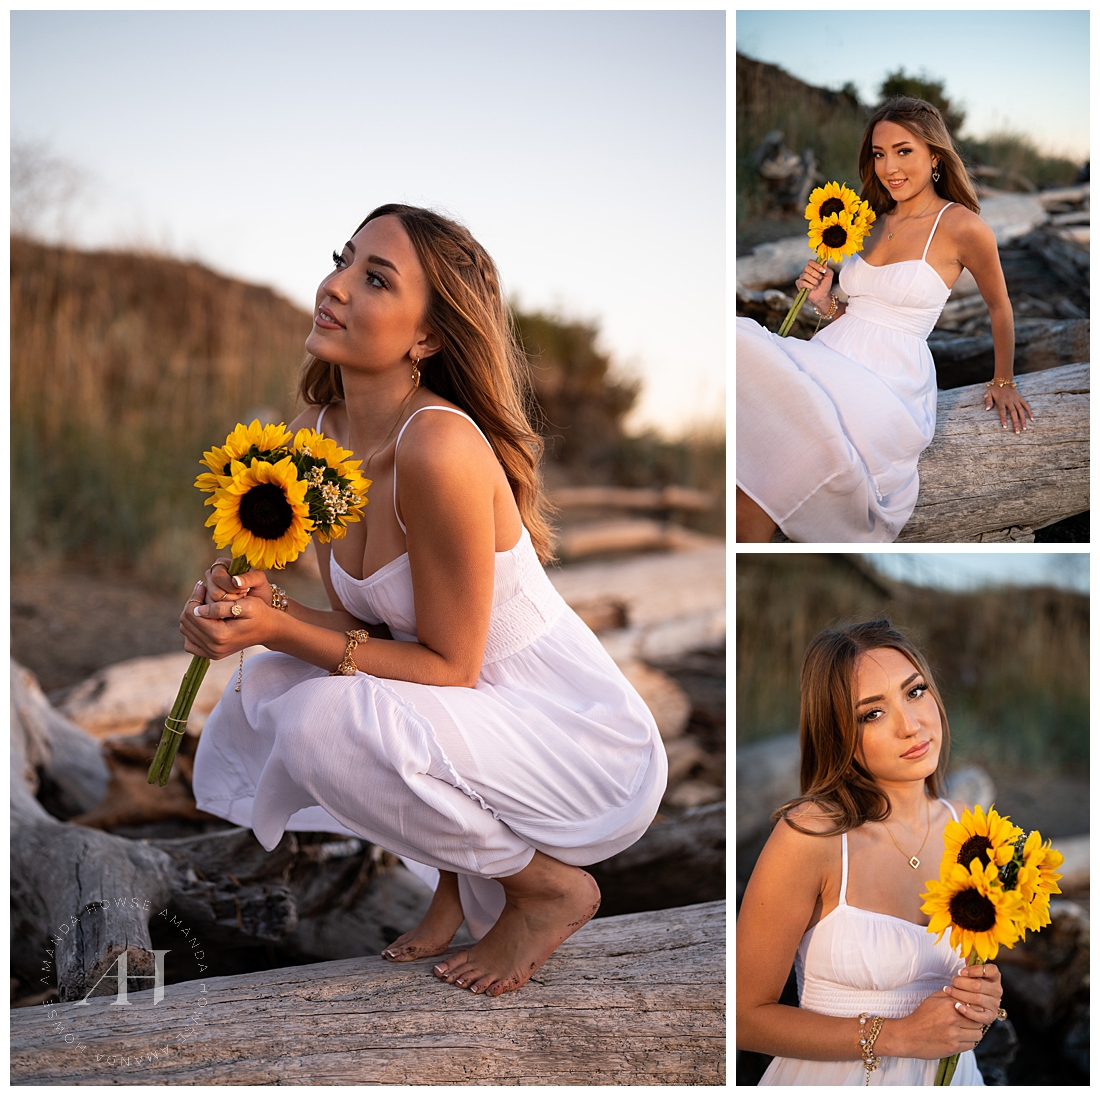 Sunflowers and Sundresses | Summertime Senior Portraits on the Beach | Amanda Howse Photography For High School Seniors 